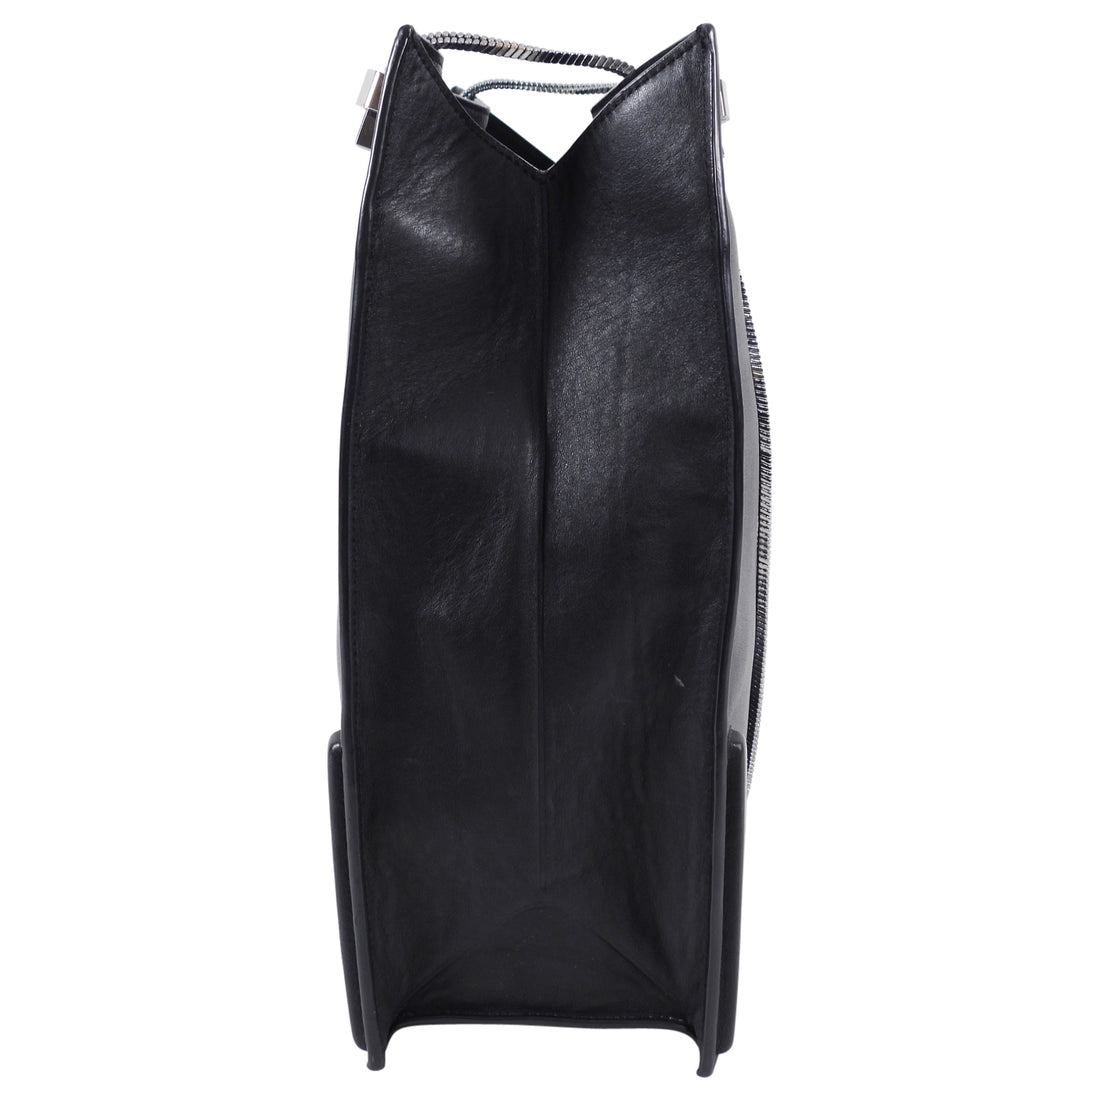 Phillip Lim Black Leather Soleil Tote Bag with Metal Straps